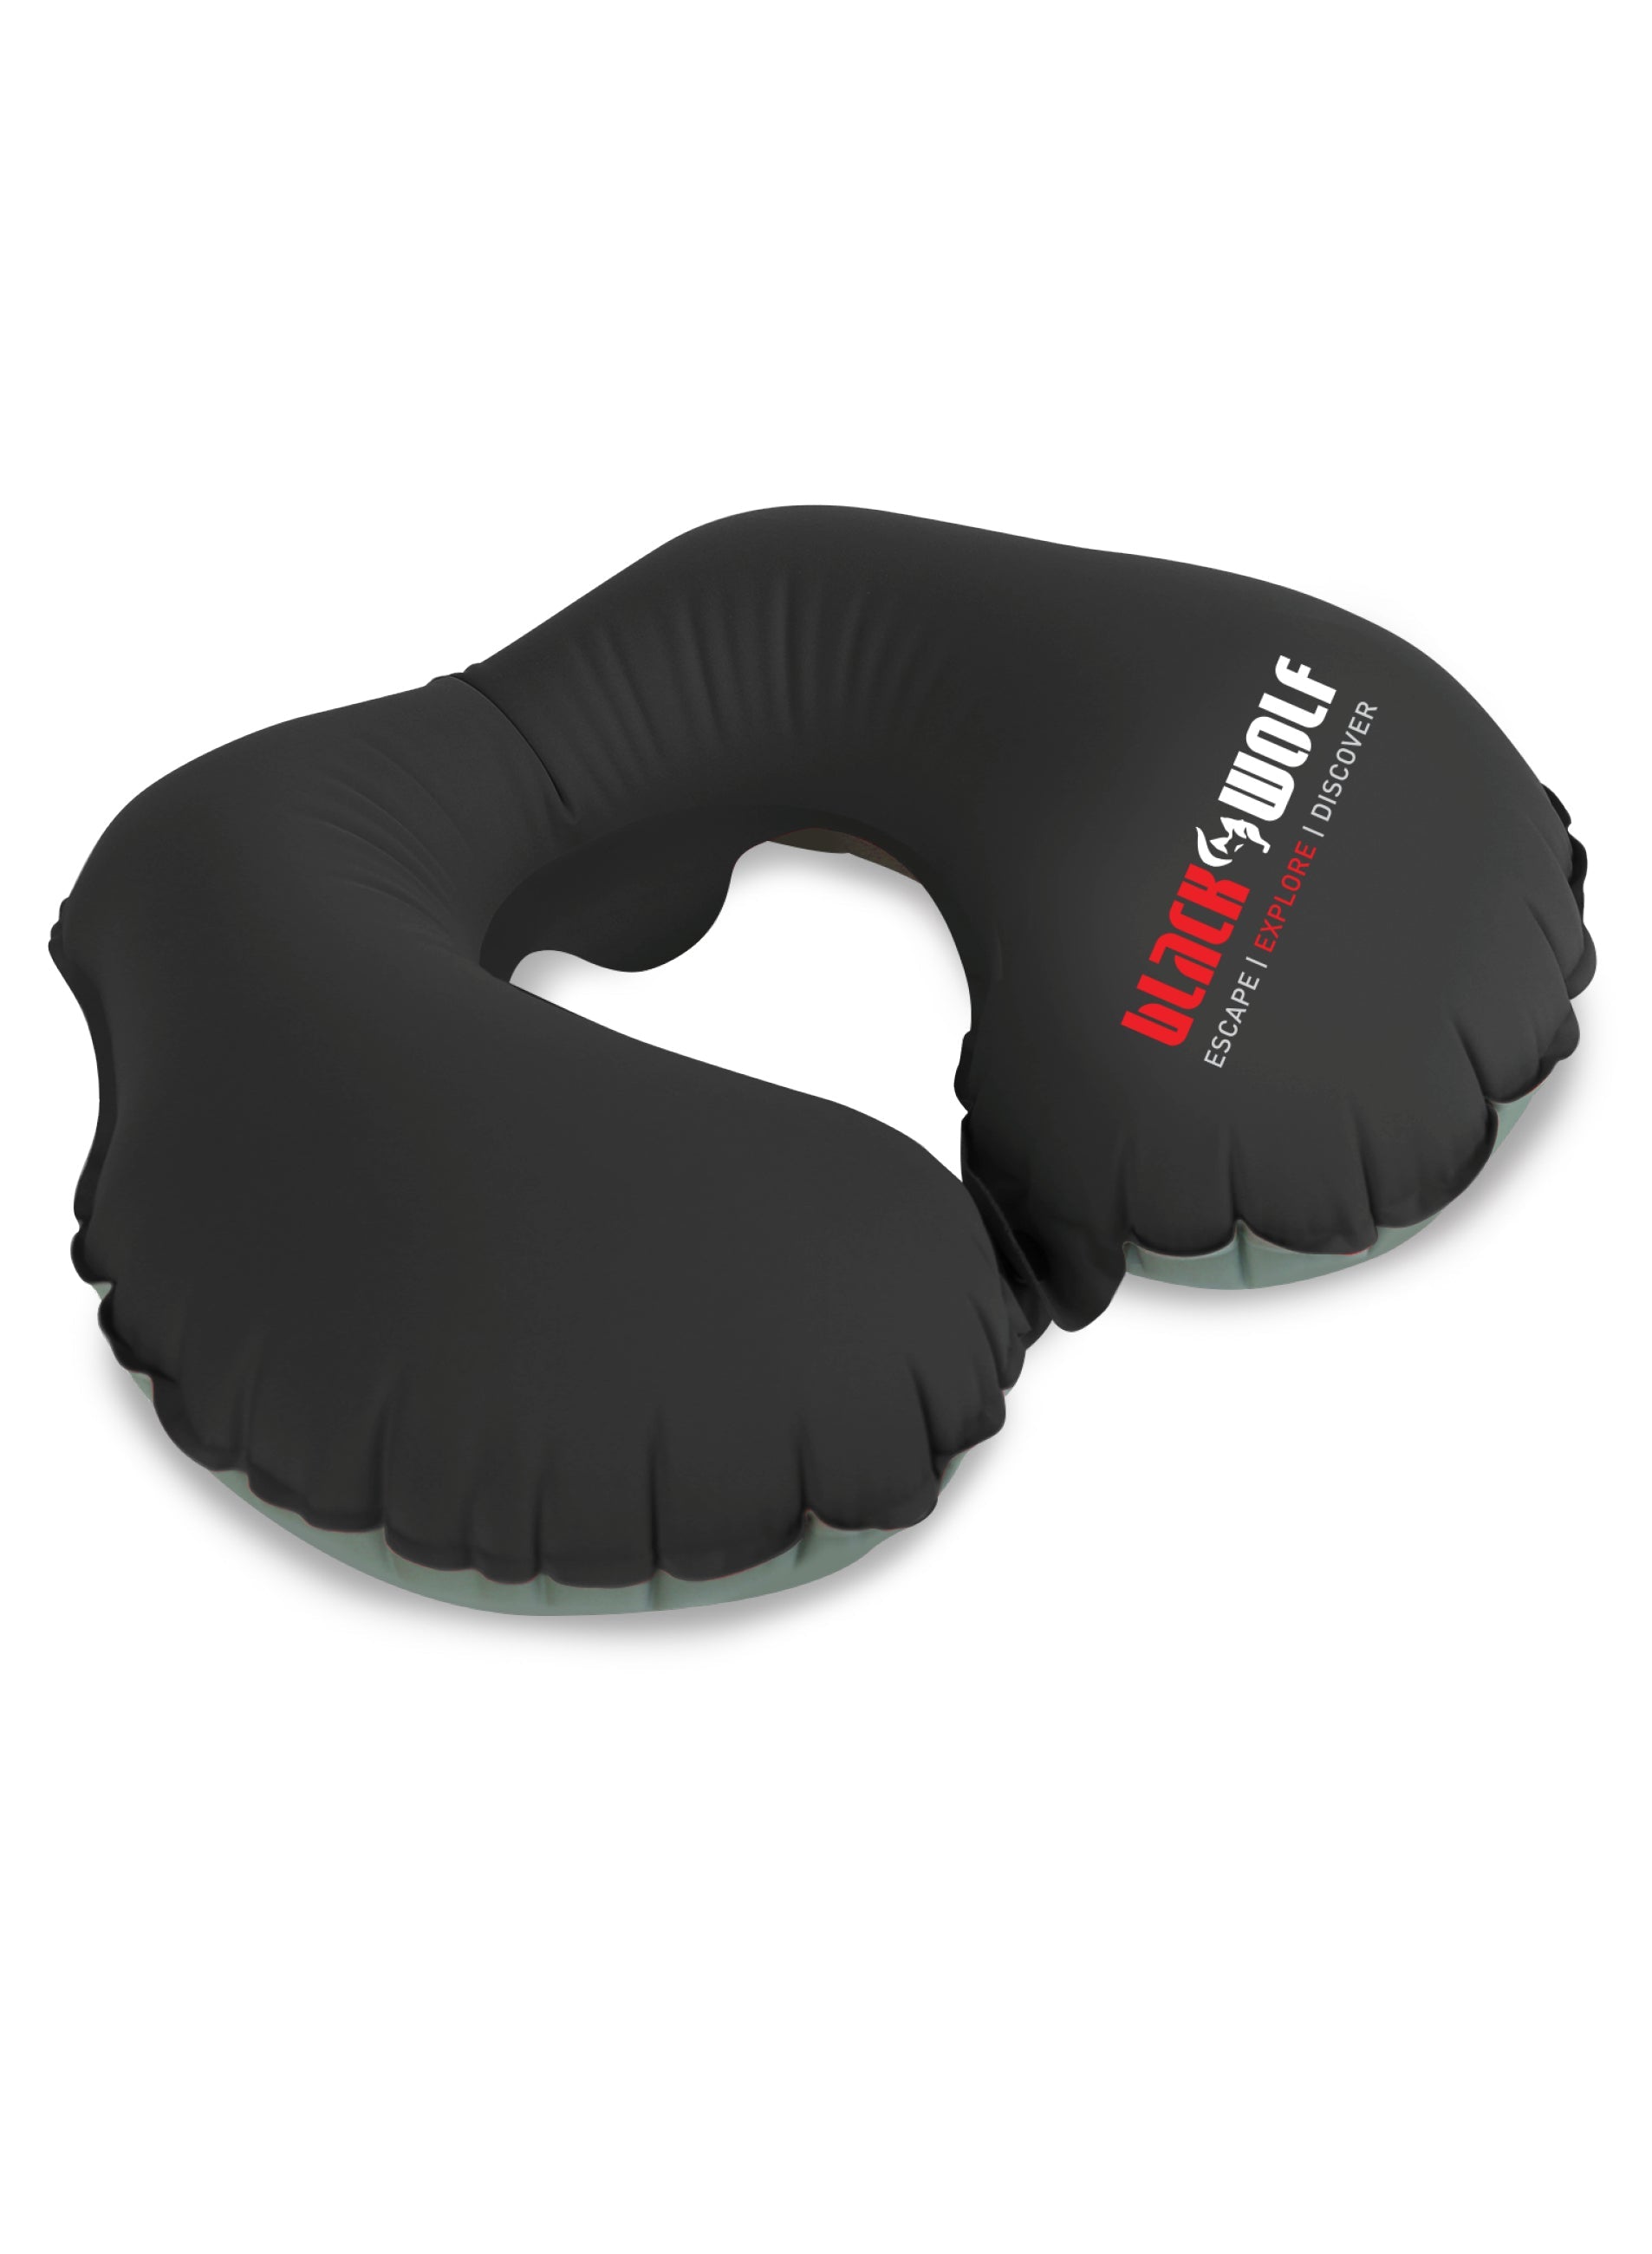 Black Wolf - Air Lite Travel inflatable neck pillow - Black-1